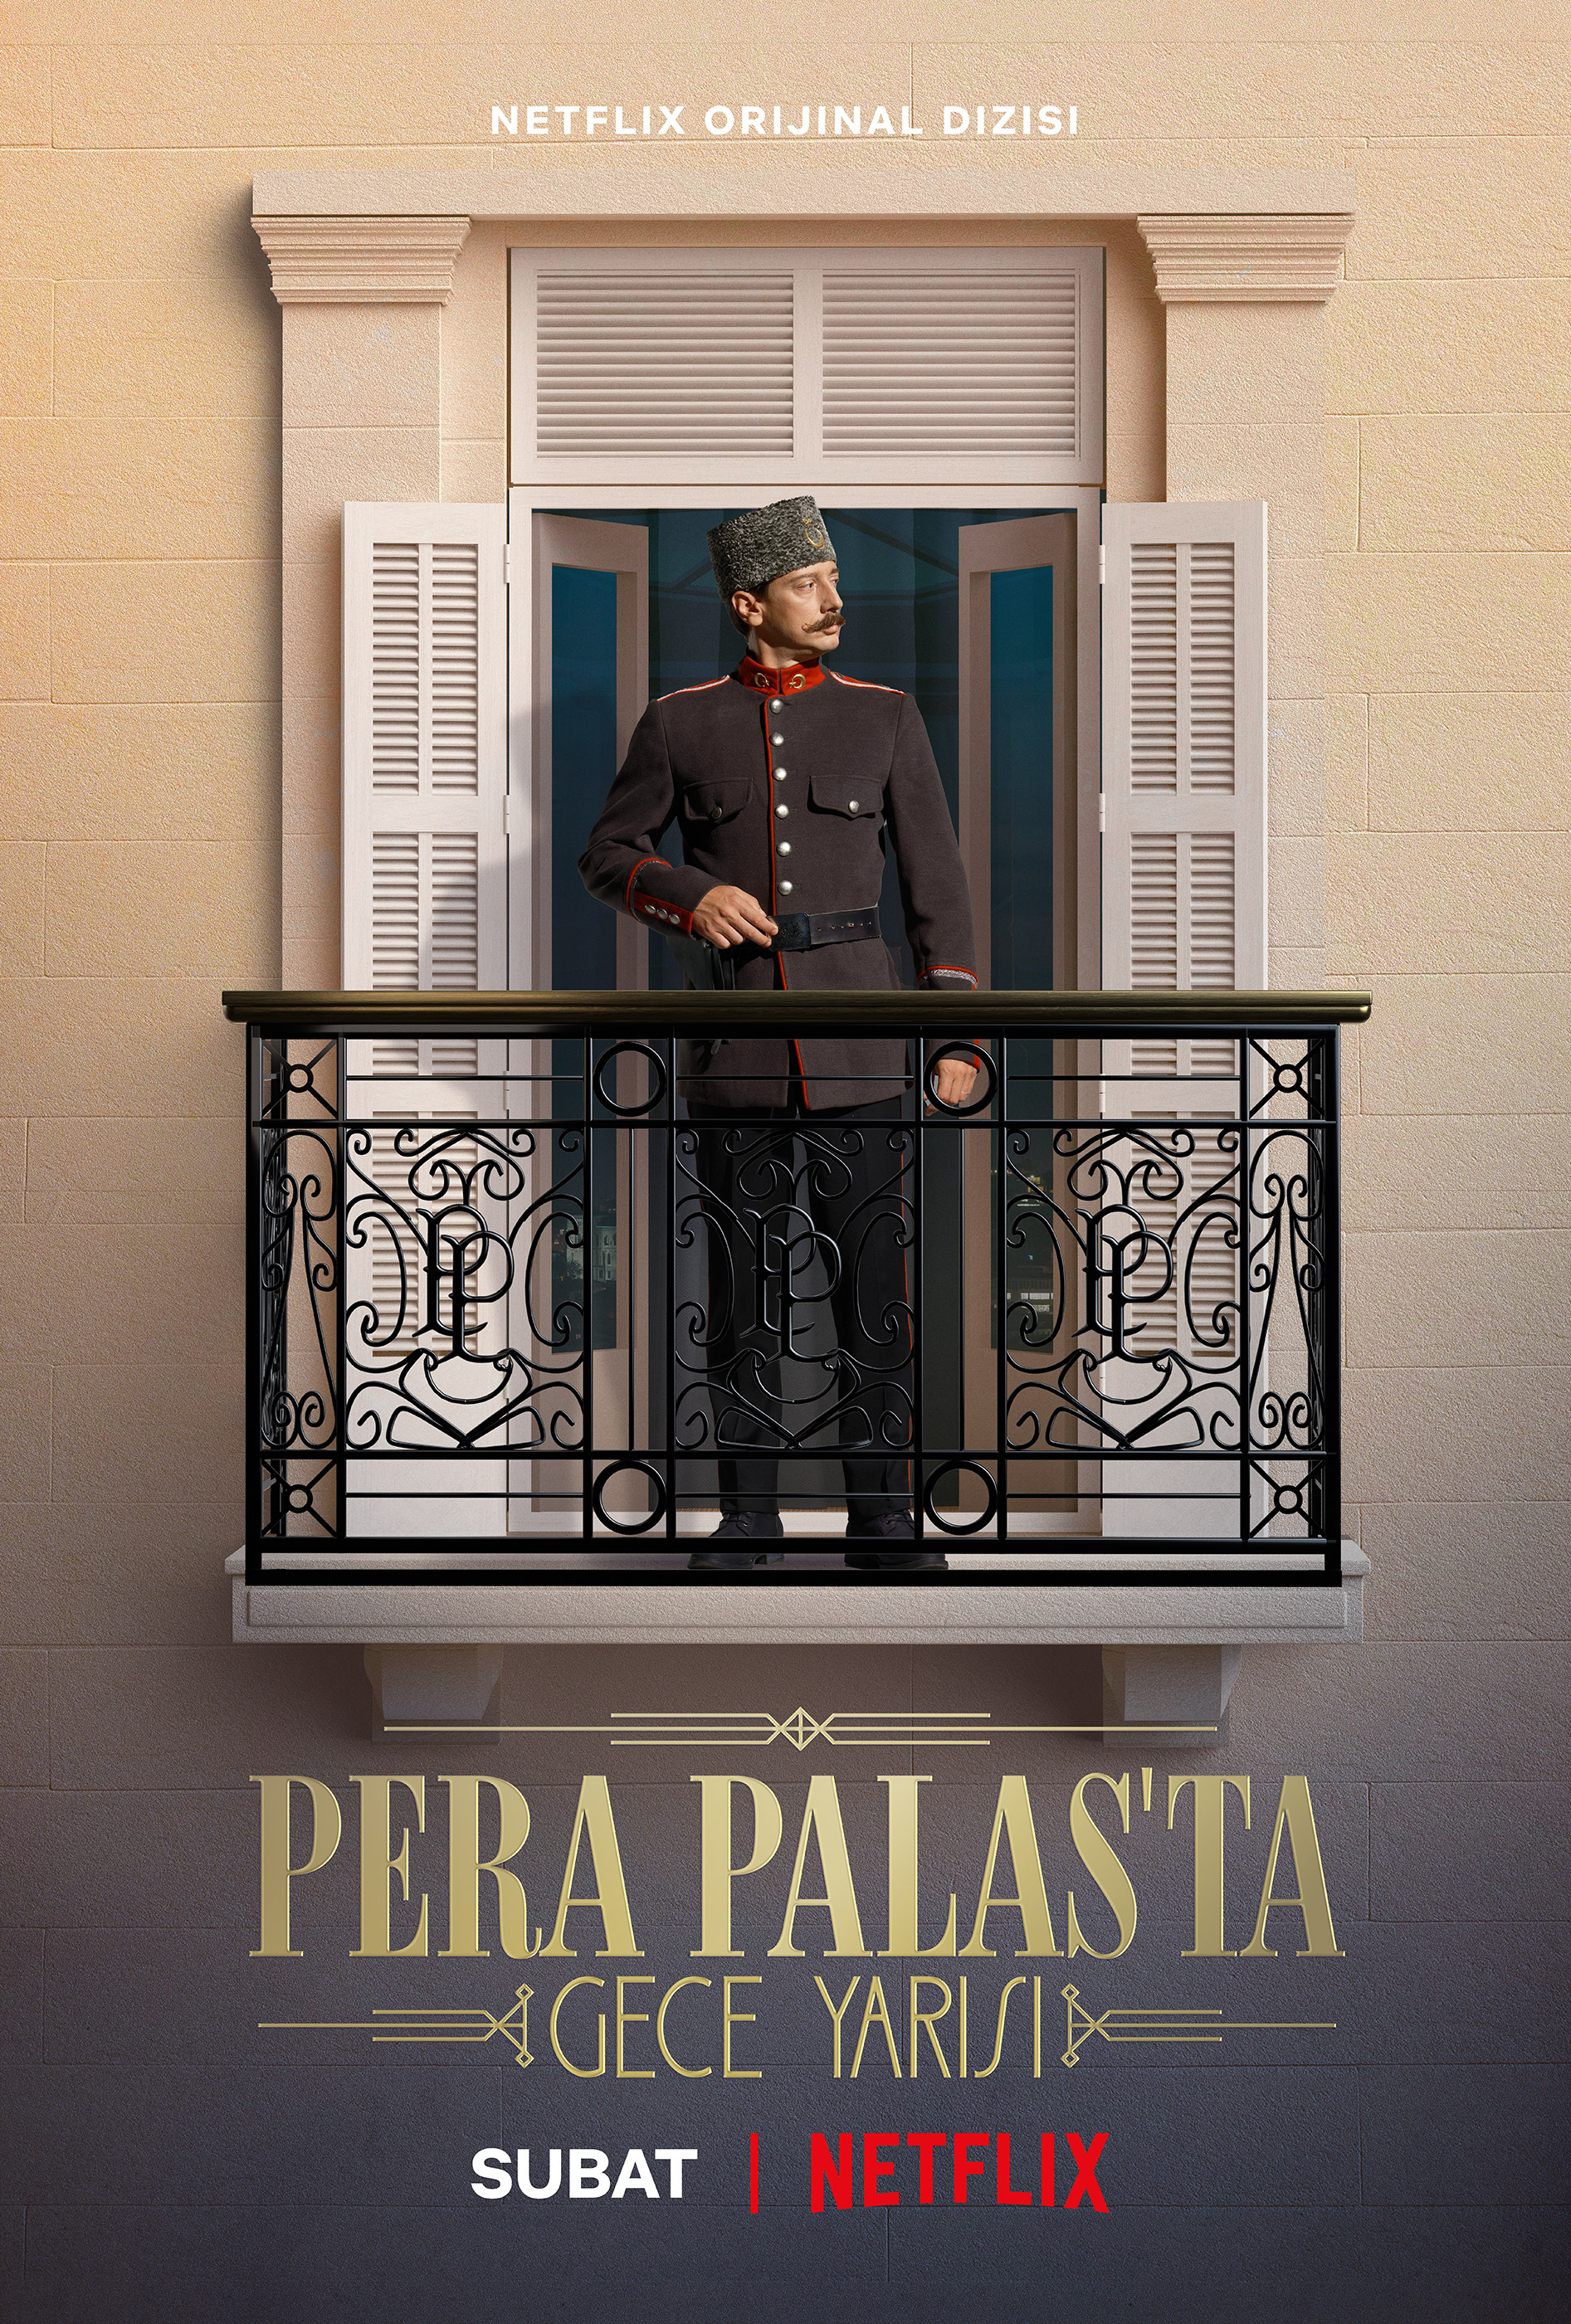 Mega Sized TV Poster Image for Pera Palas'ta Gece Yarisi (#9 of 10)